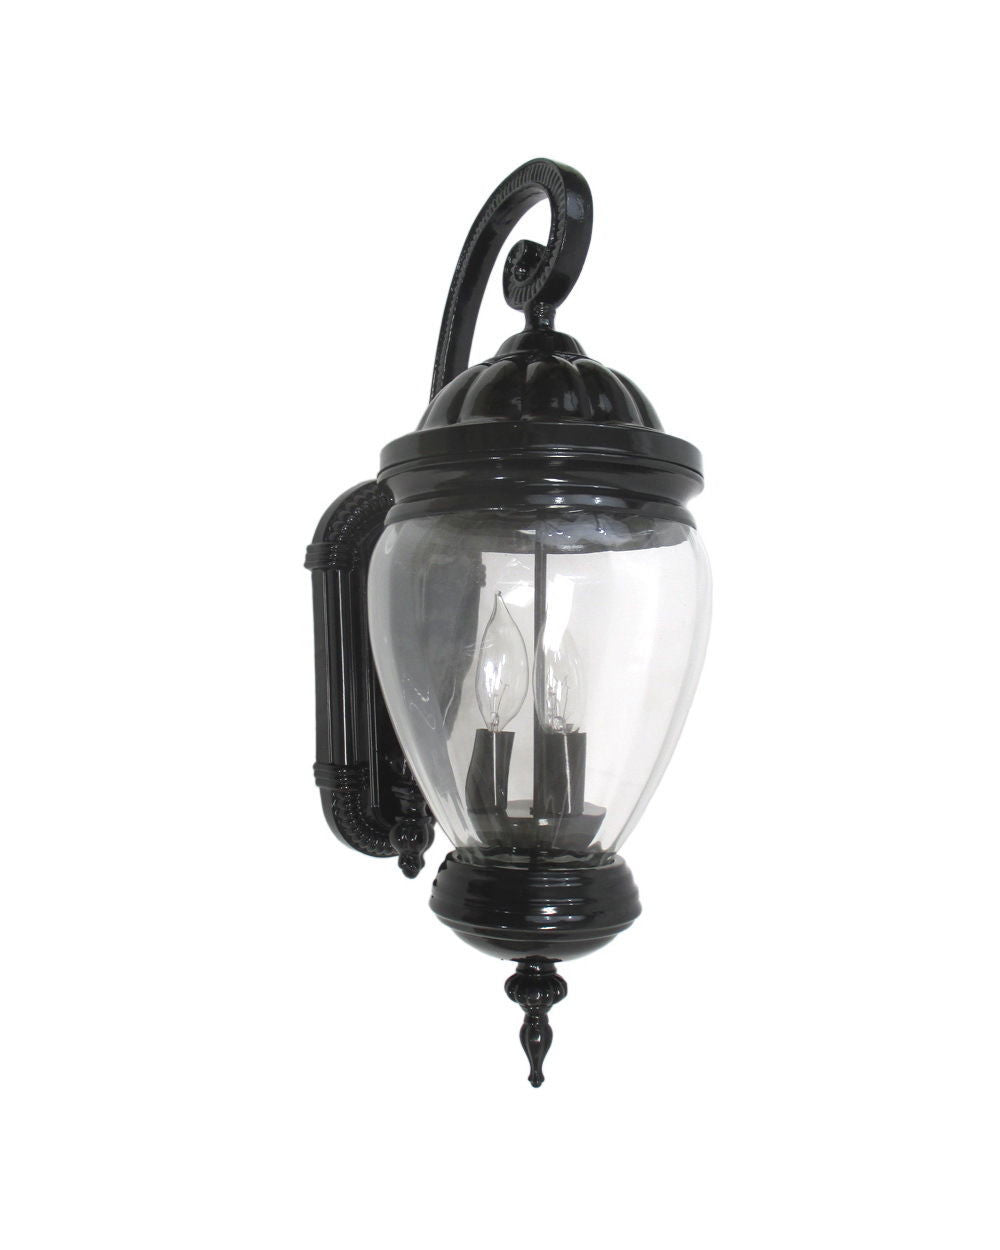 Epiphany Lighting 104973 BK One Light Cast Aluminum Outdoor Exterior Wall Lantern in Black Finish